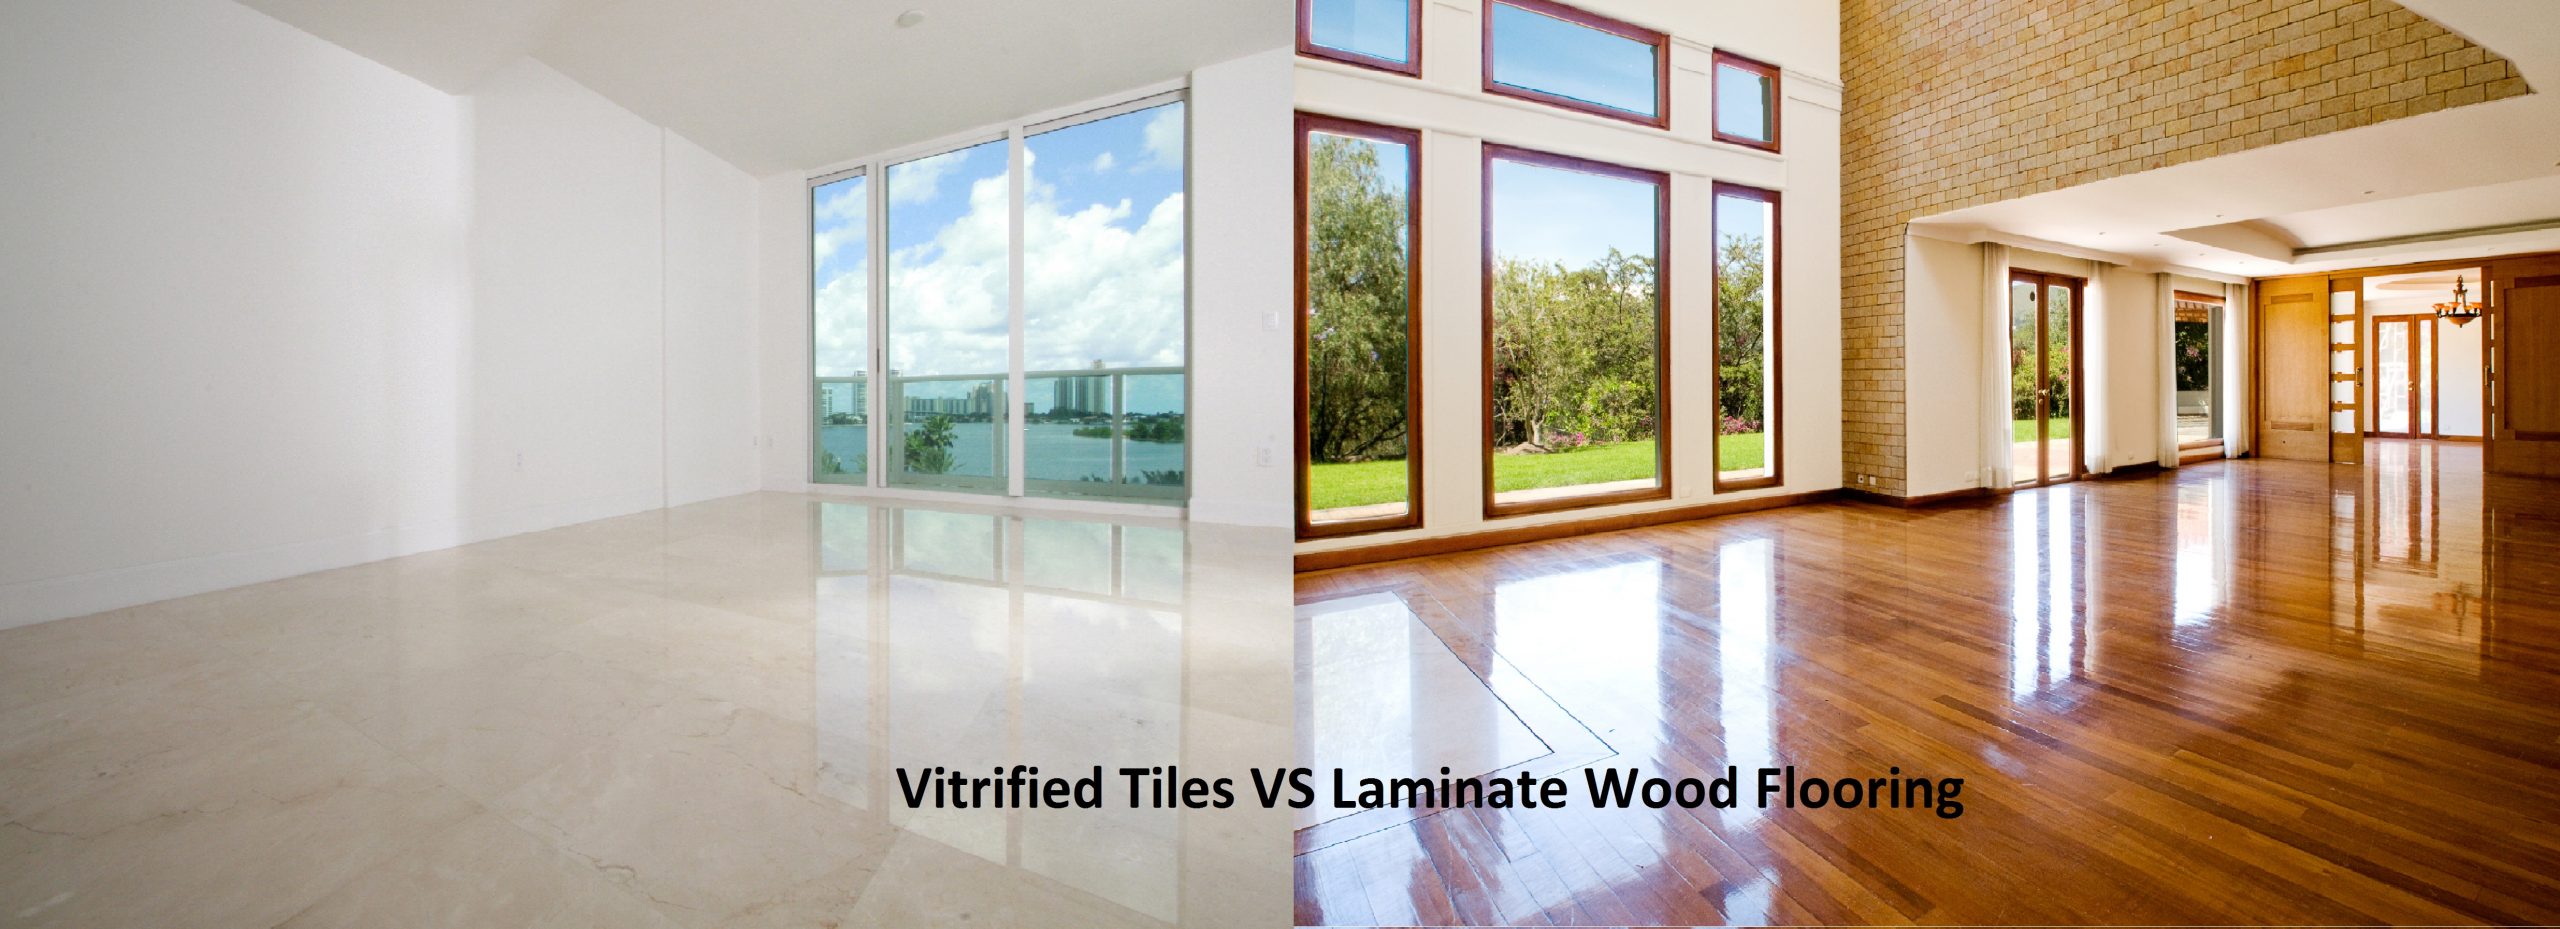 Vitrified Tiles vs Laminate Wood Flooring